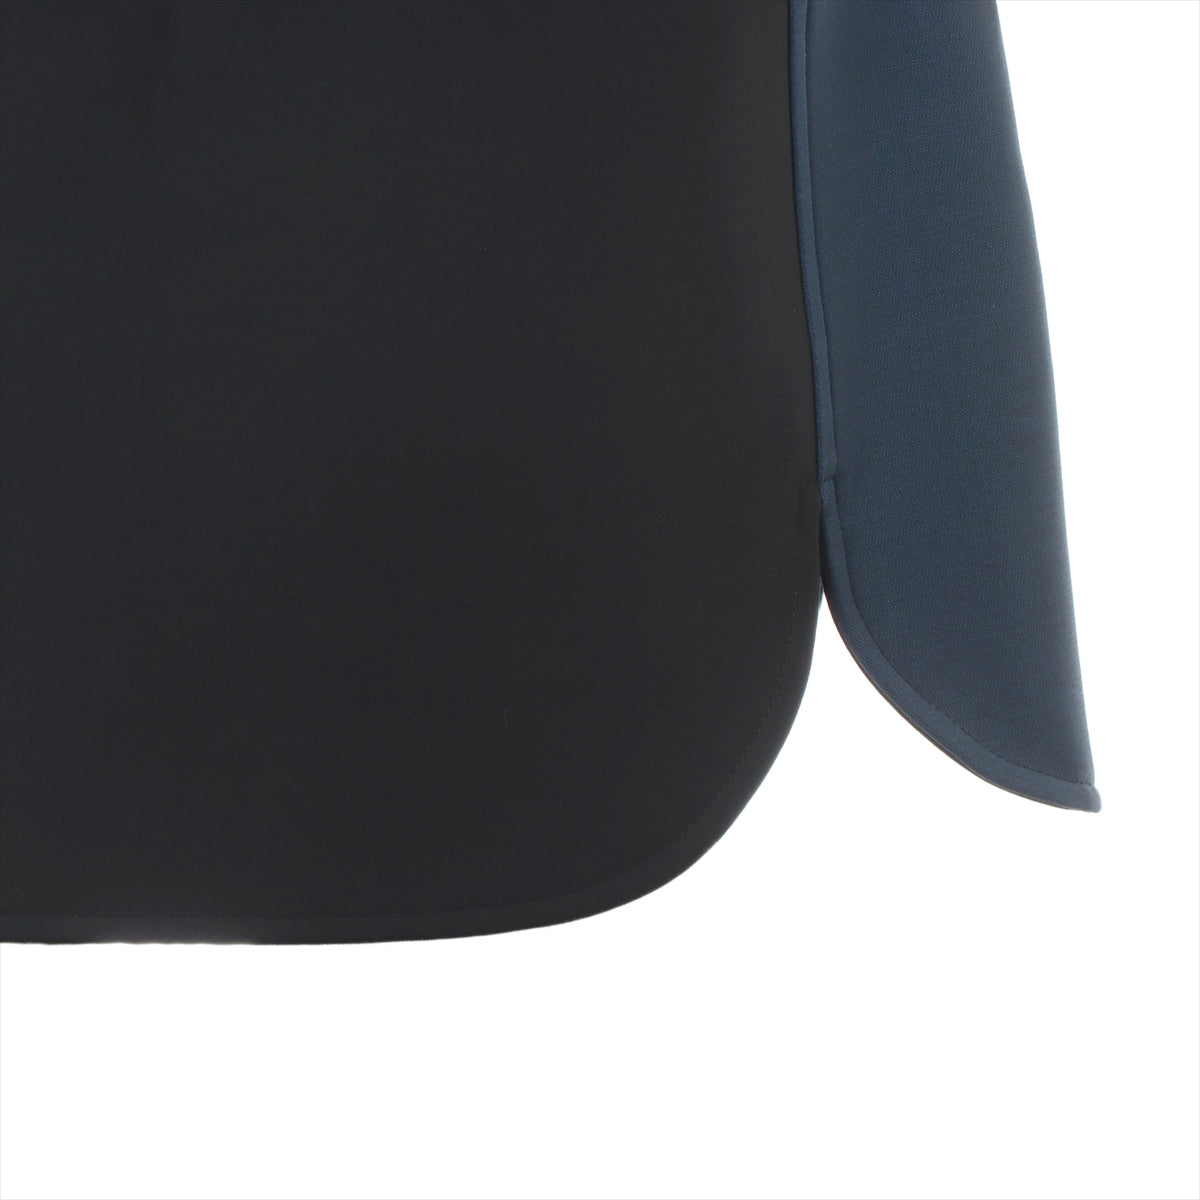 Louis Vuitton Wool & silk Skirt 36 Ladies' Black x Navy  LV logo button leather belt zipped pocket